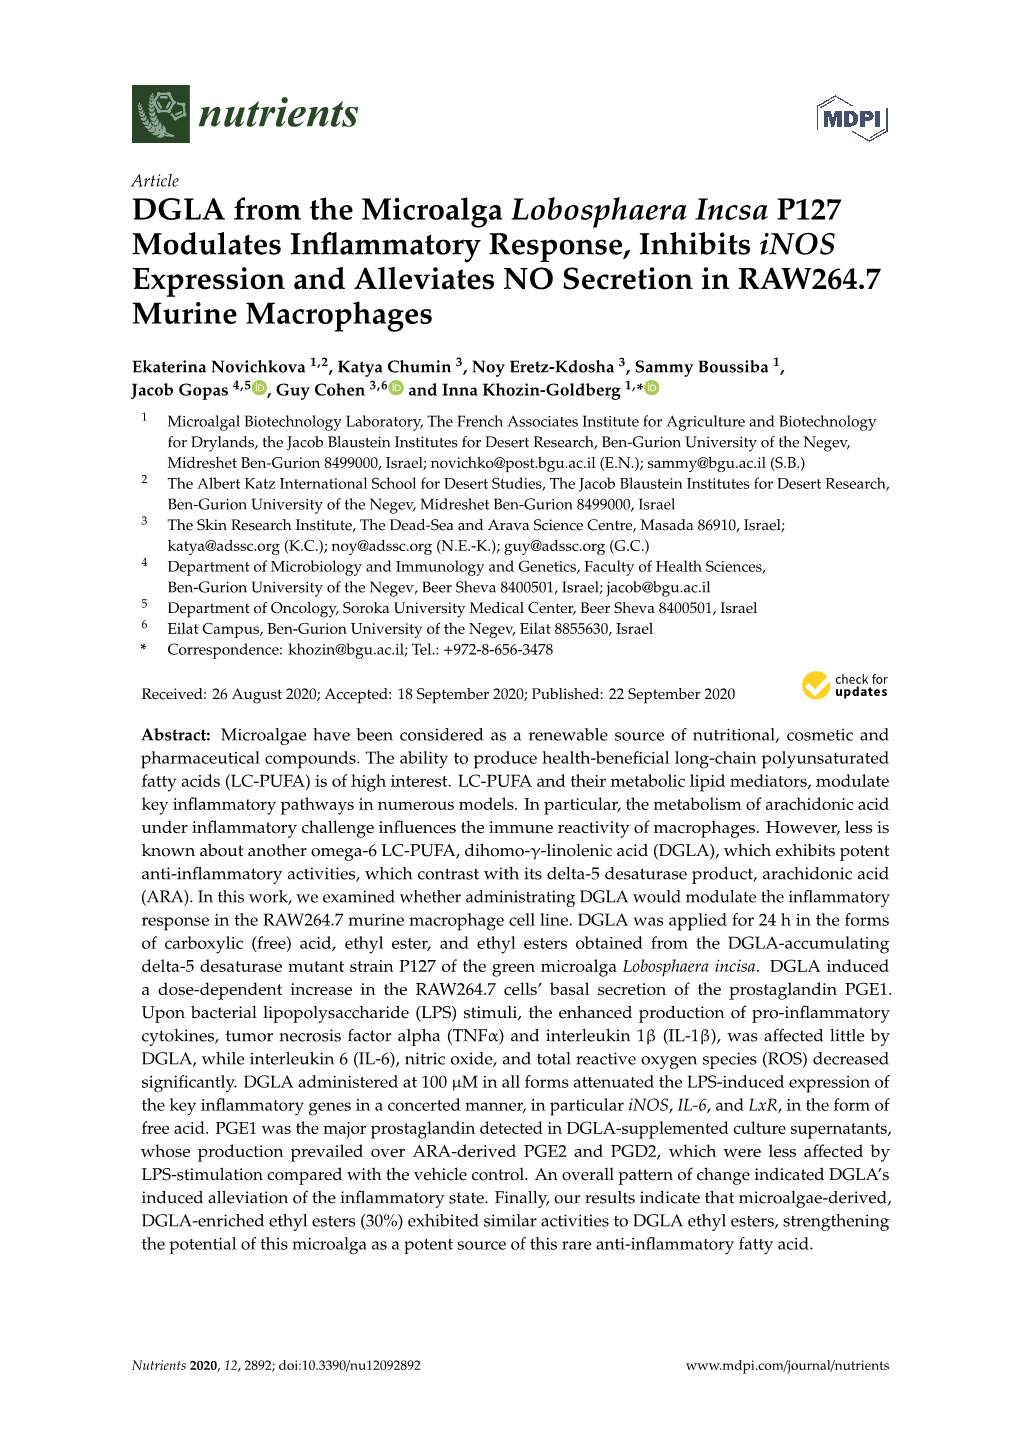 DGLA from the Microalga Lobosphaera Incsa P127 Modulates Inflammatory Response, Inhibits Inos Expression and Alleviates NO Secretion in RAW264. 7 Murine Macrophages